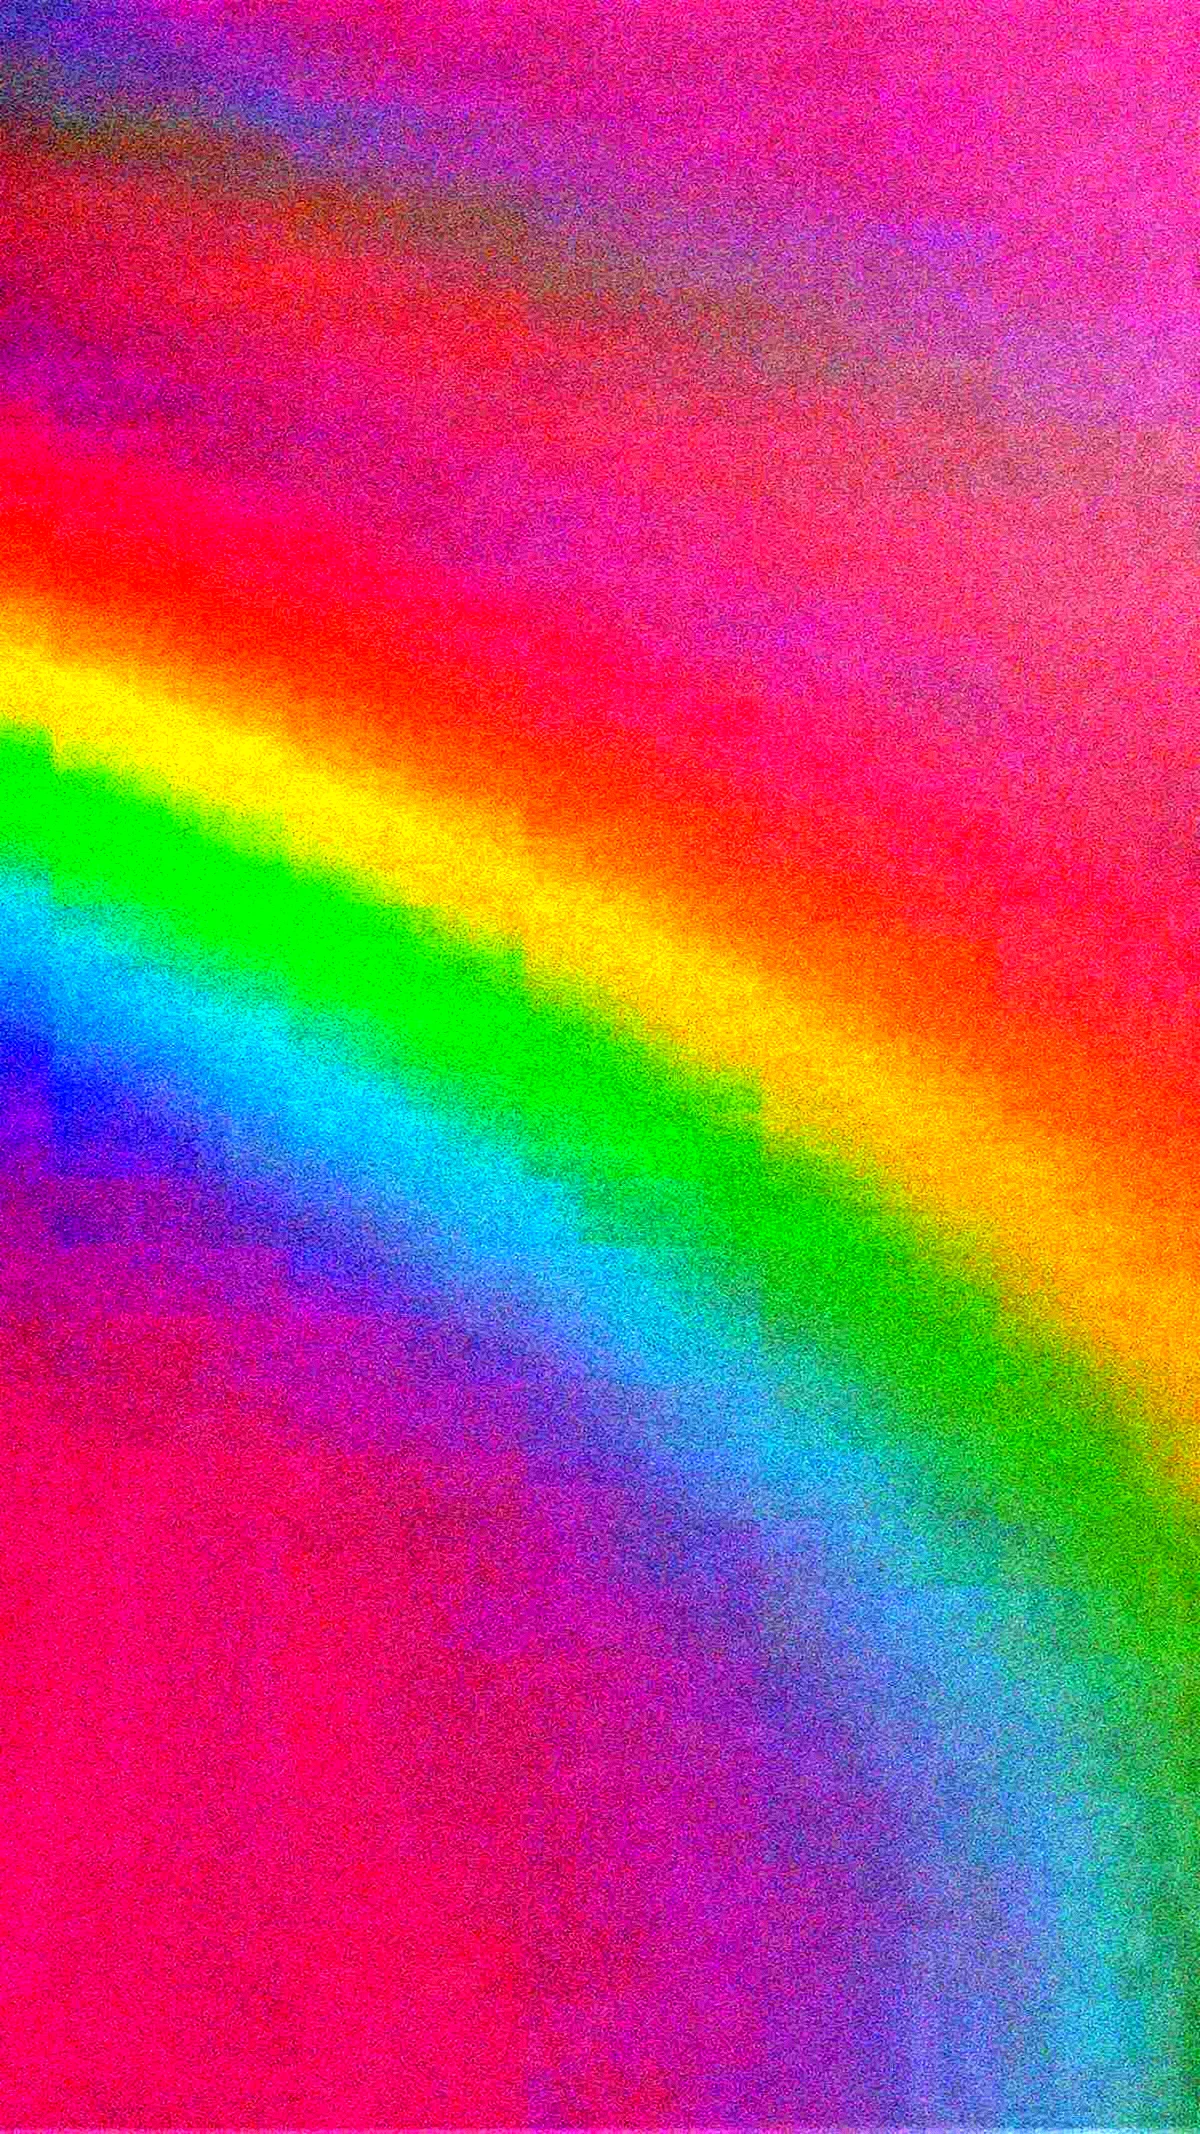 Fon Rainbow Wallpaper For iPhone